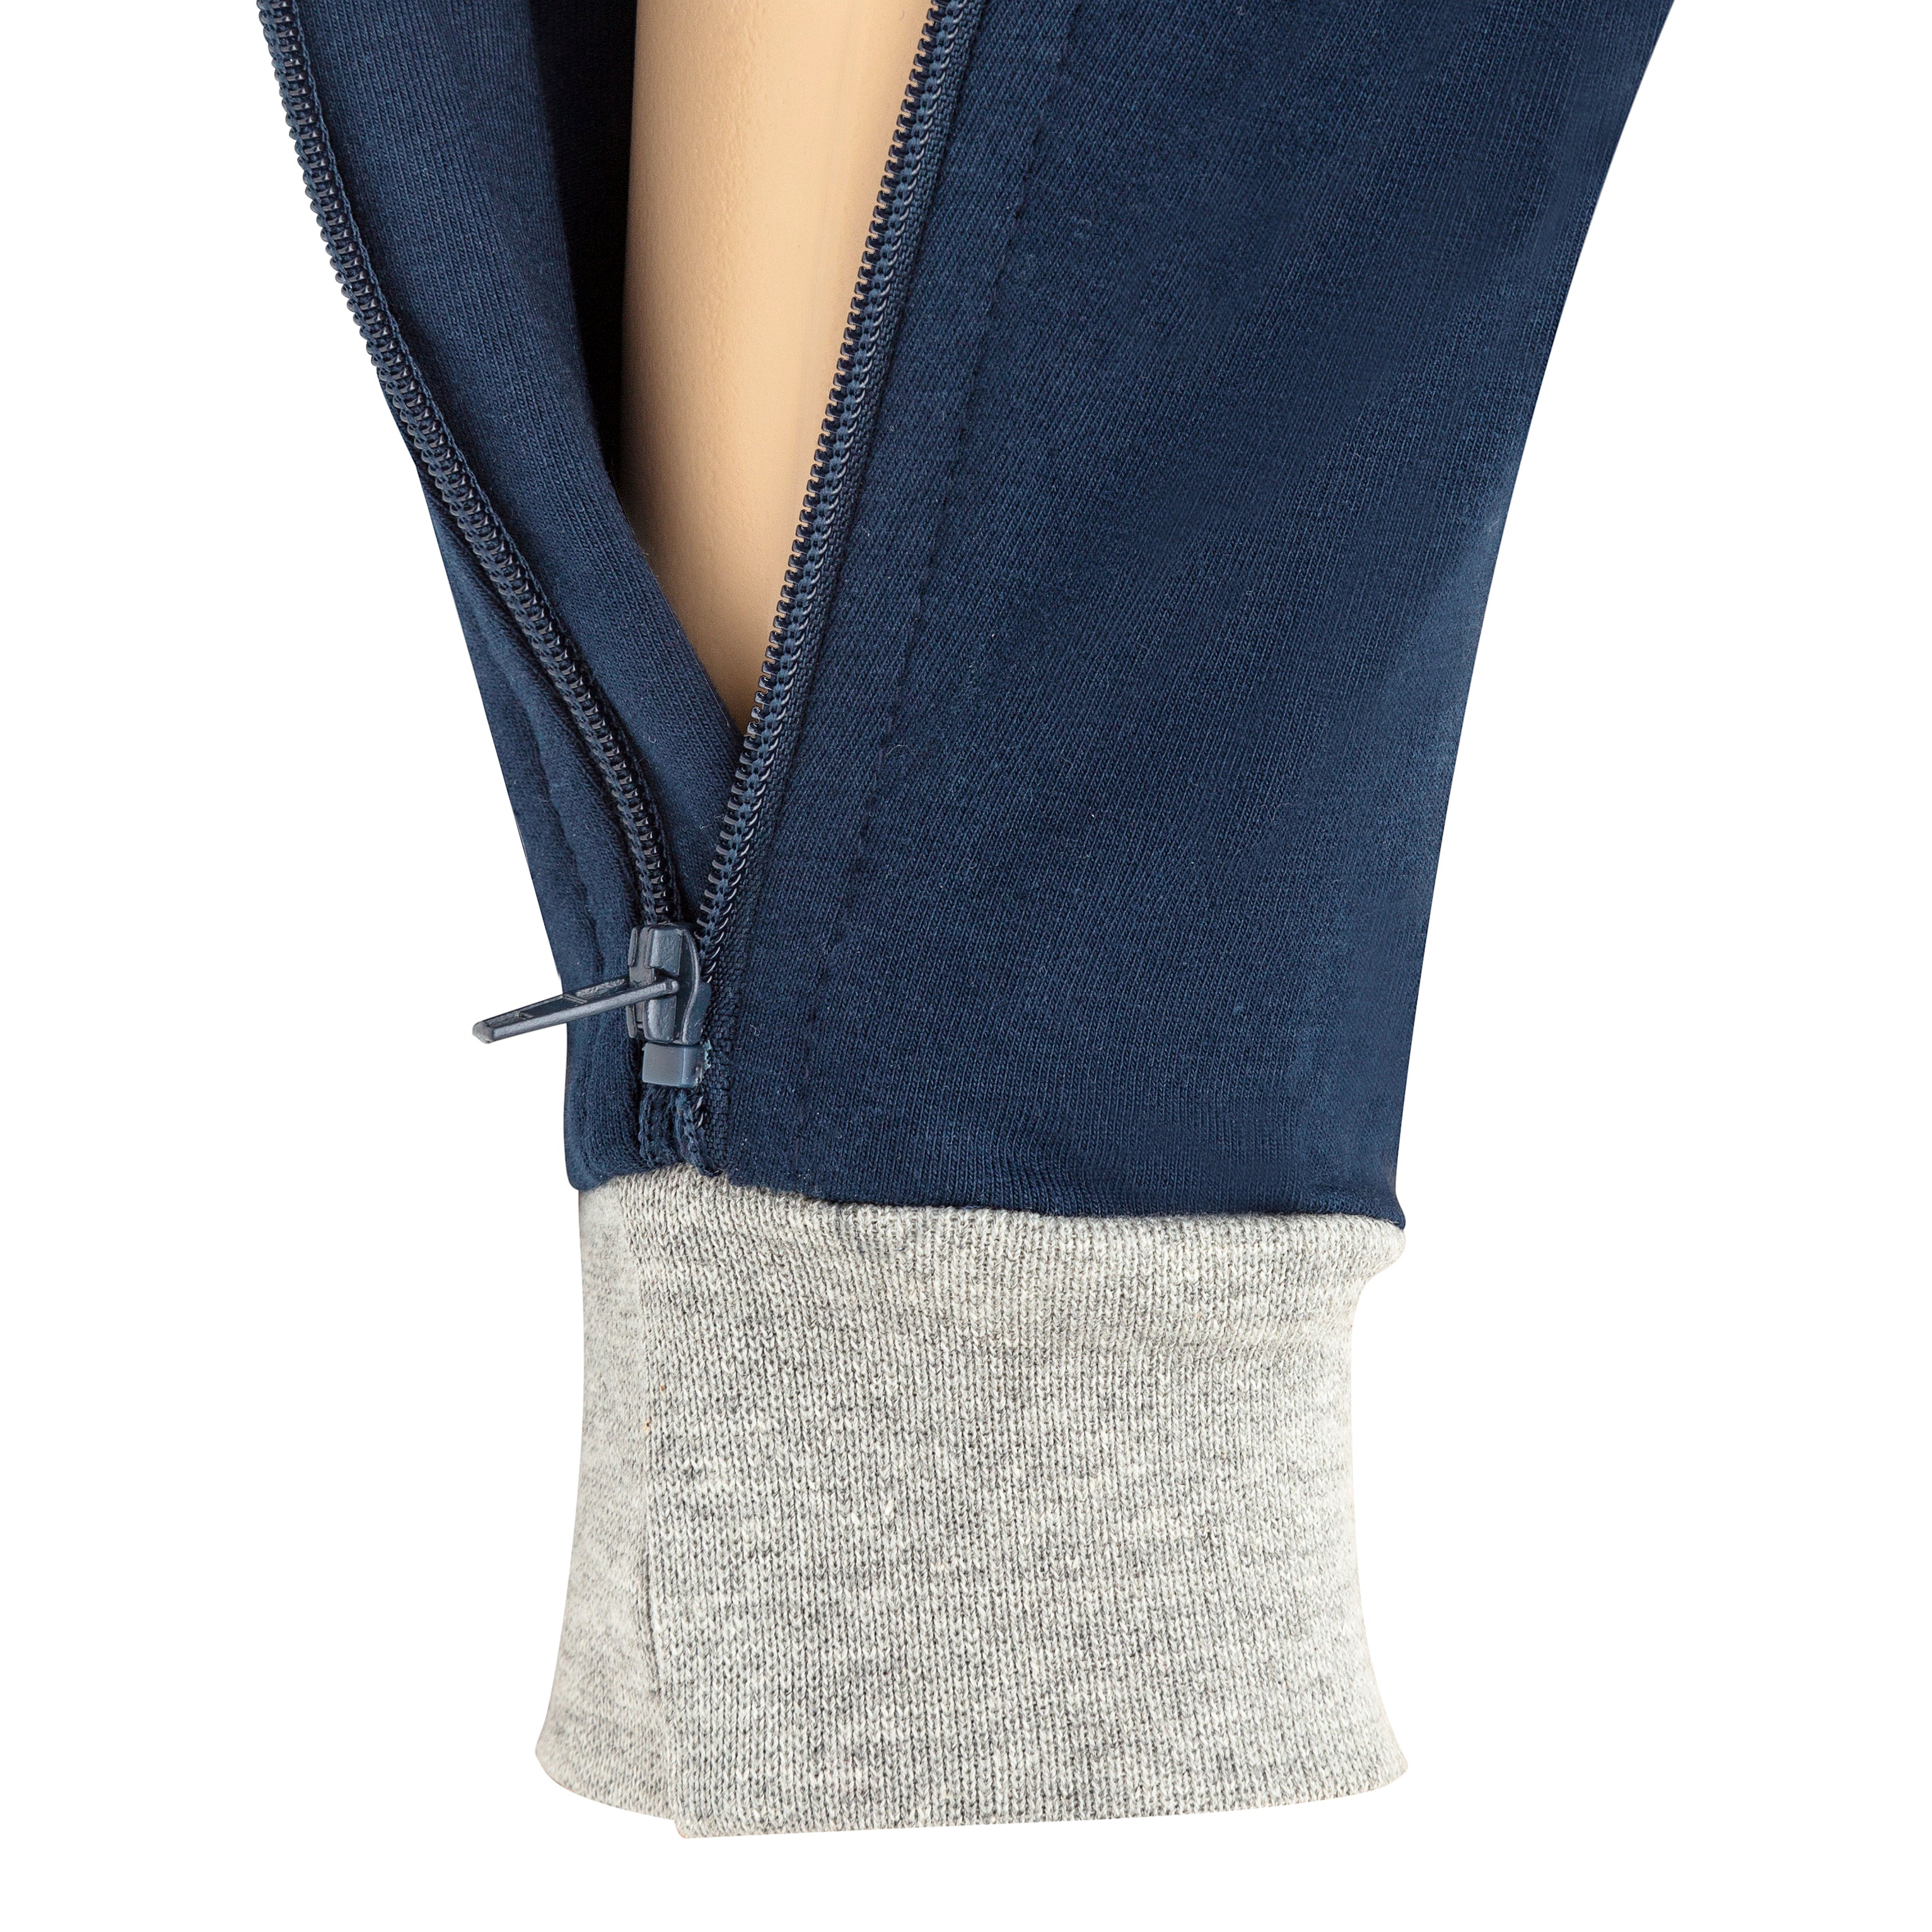 KayCey®Z Secret Zip Back Jumpsuits - Short Sleeve / Ankle Length (KIDS)